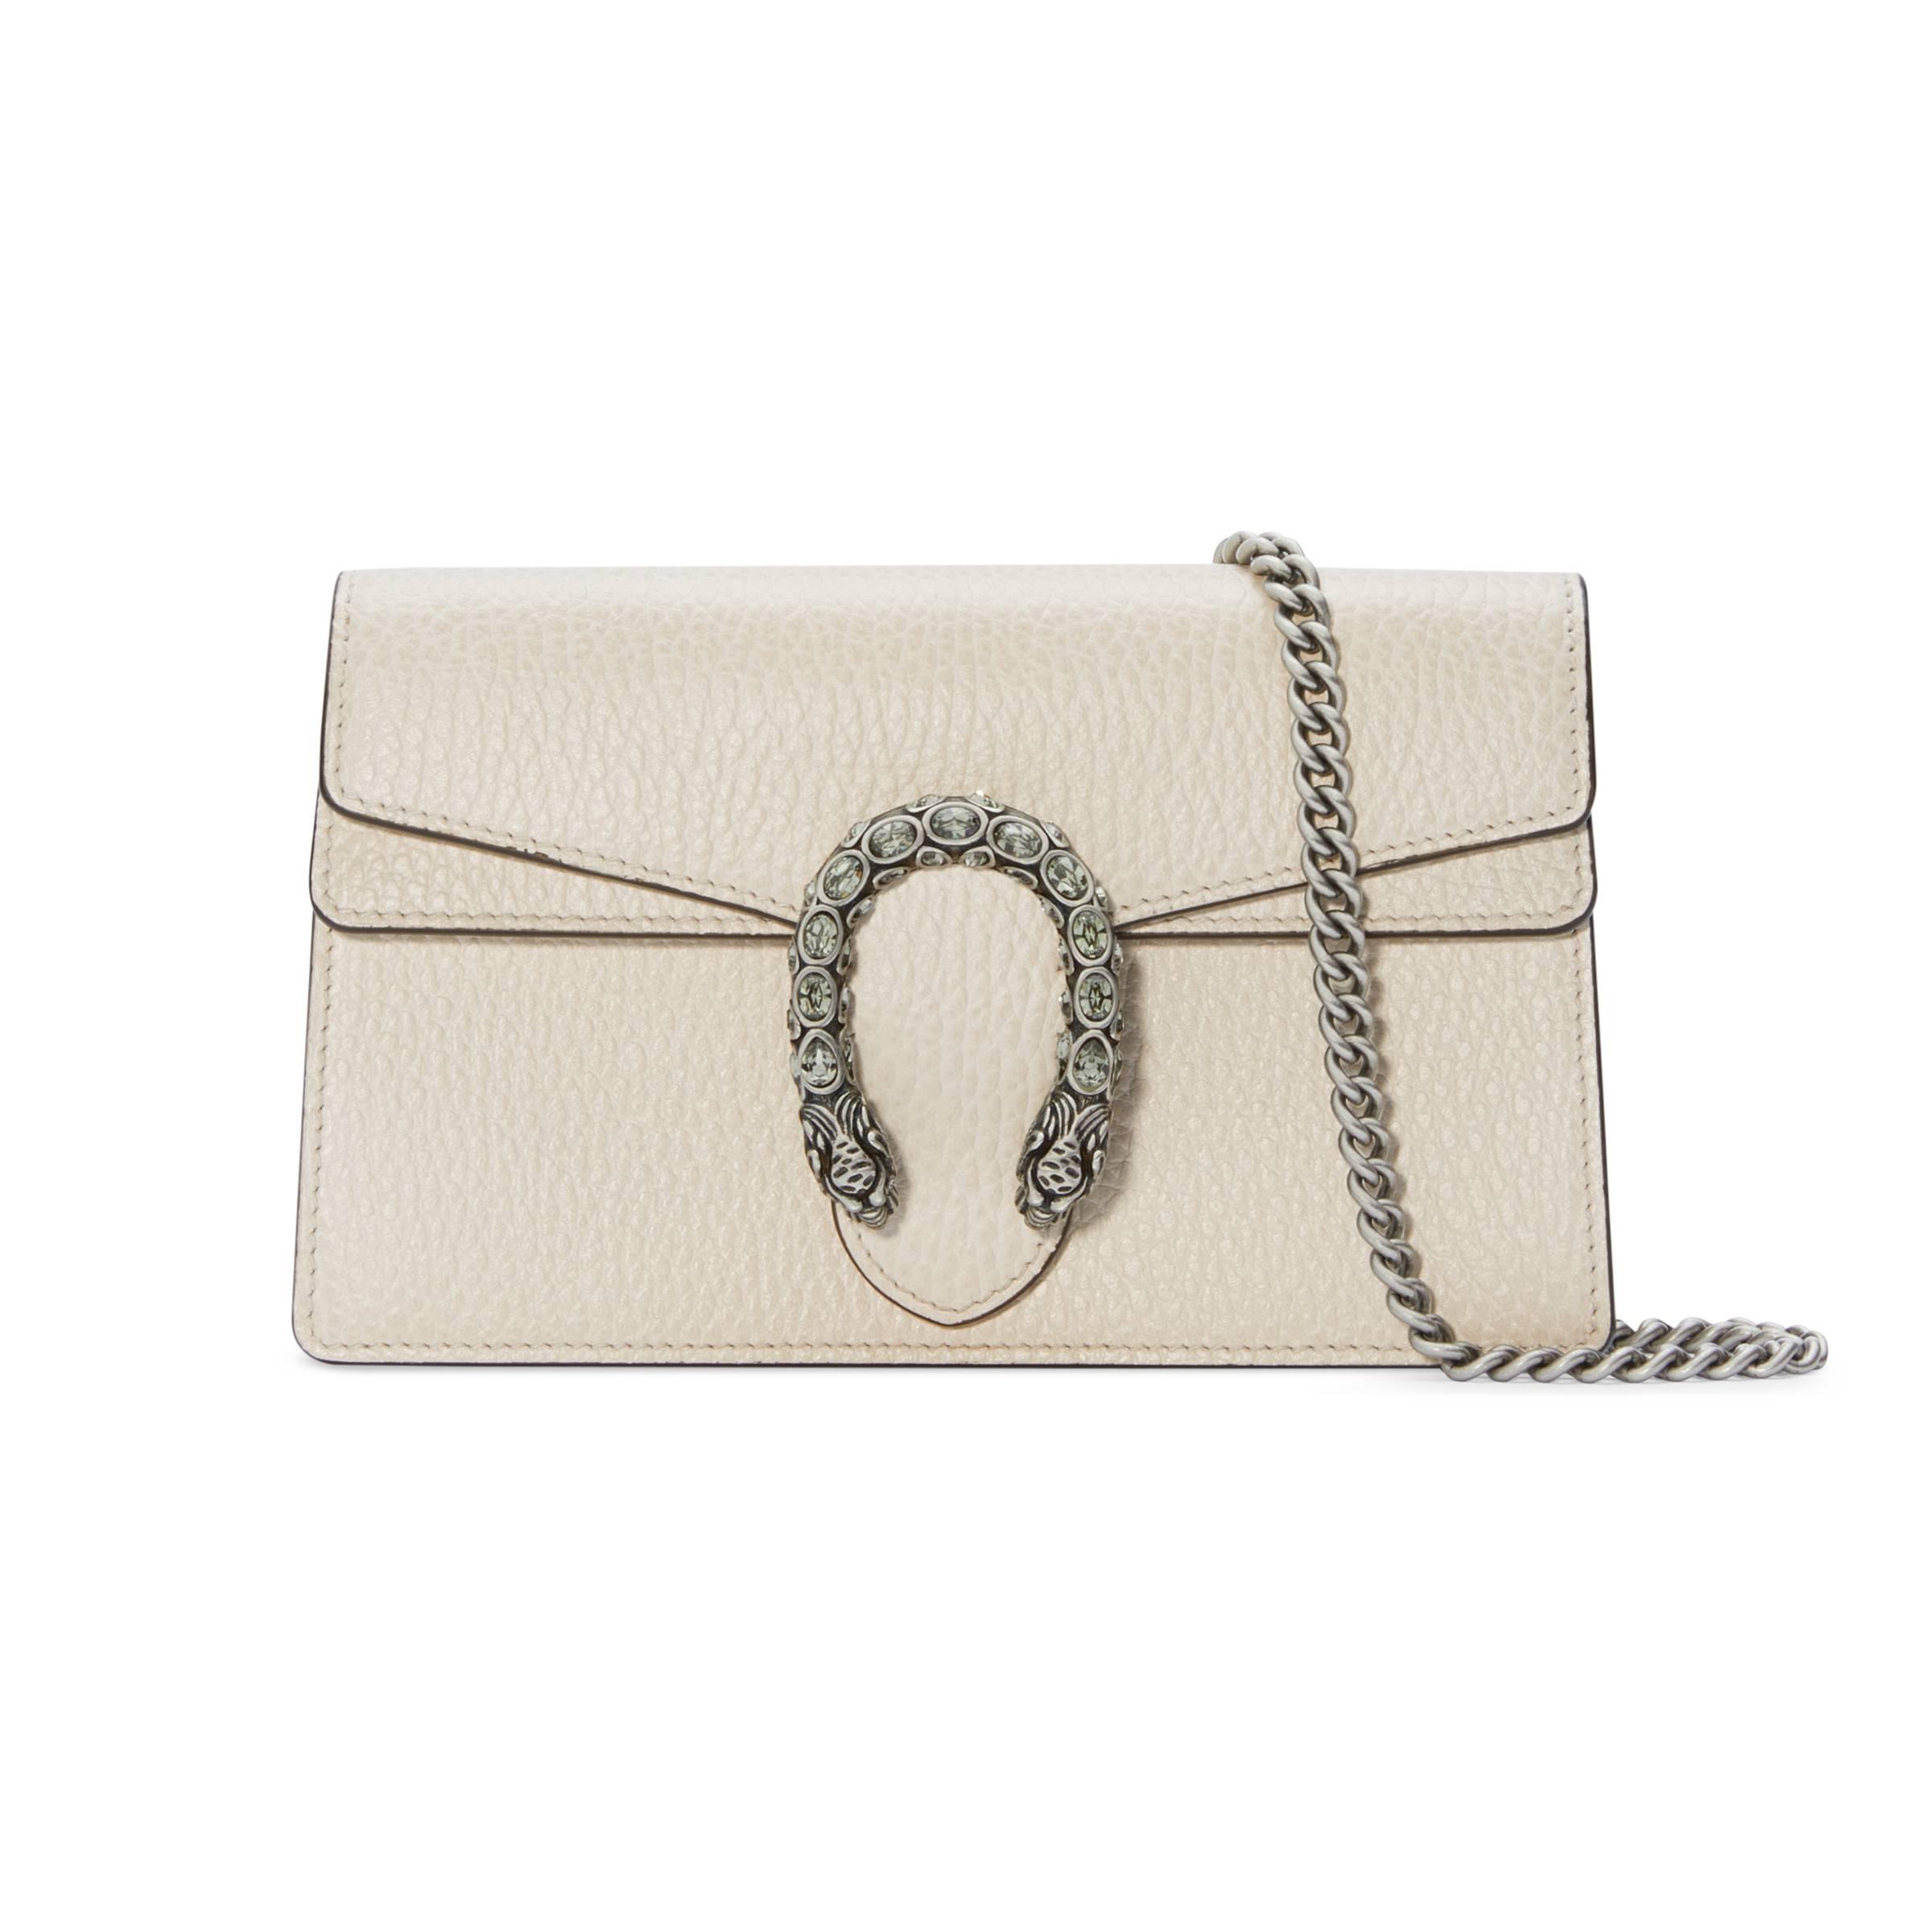 Gucci Leather Dionysus Super Mini Bag in White Leather (White) - Lyst